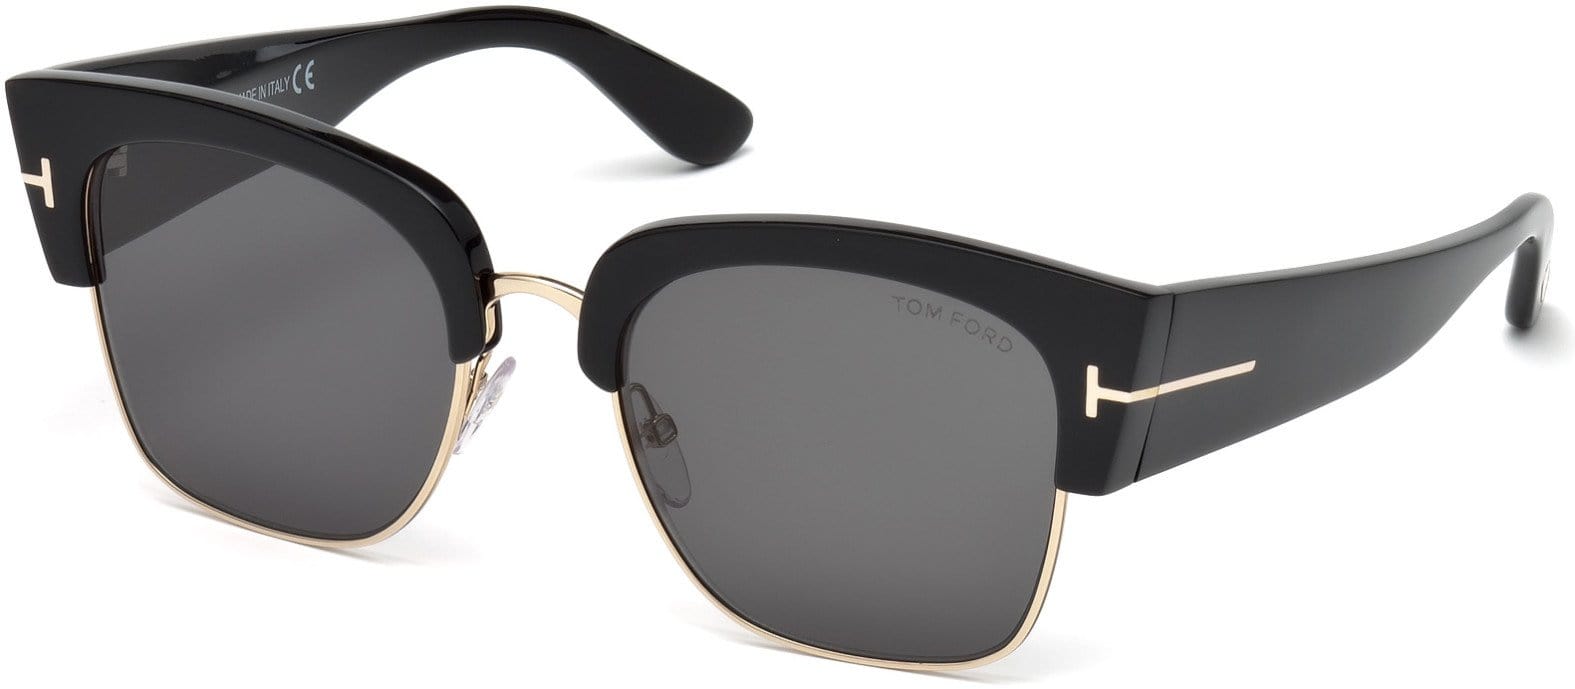 Tom Ford FT0554 Dakota-02 Geometric Sunglasses 01A-01A - Shiny Black  / Smoke